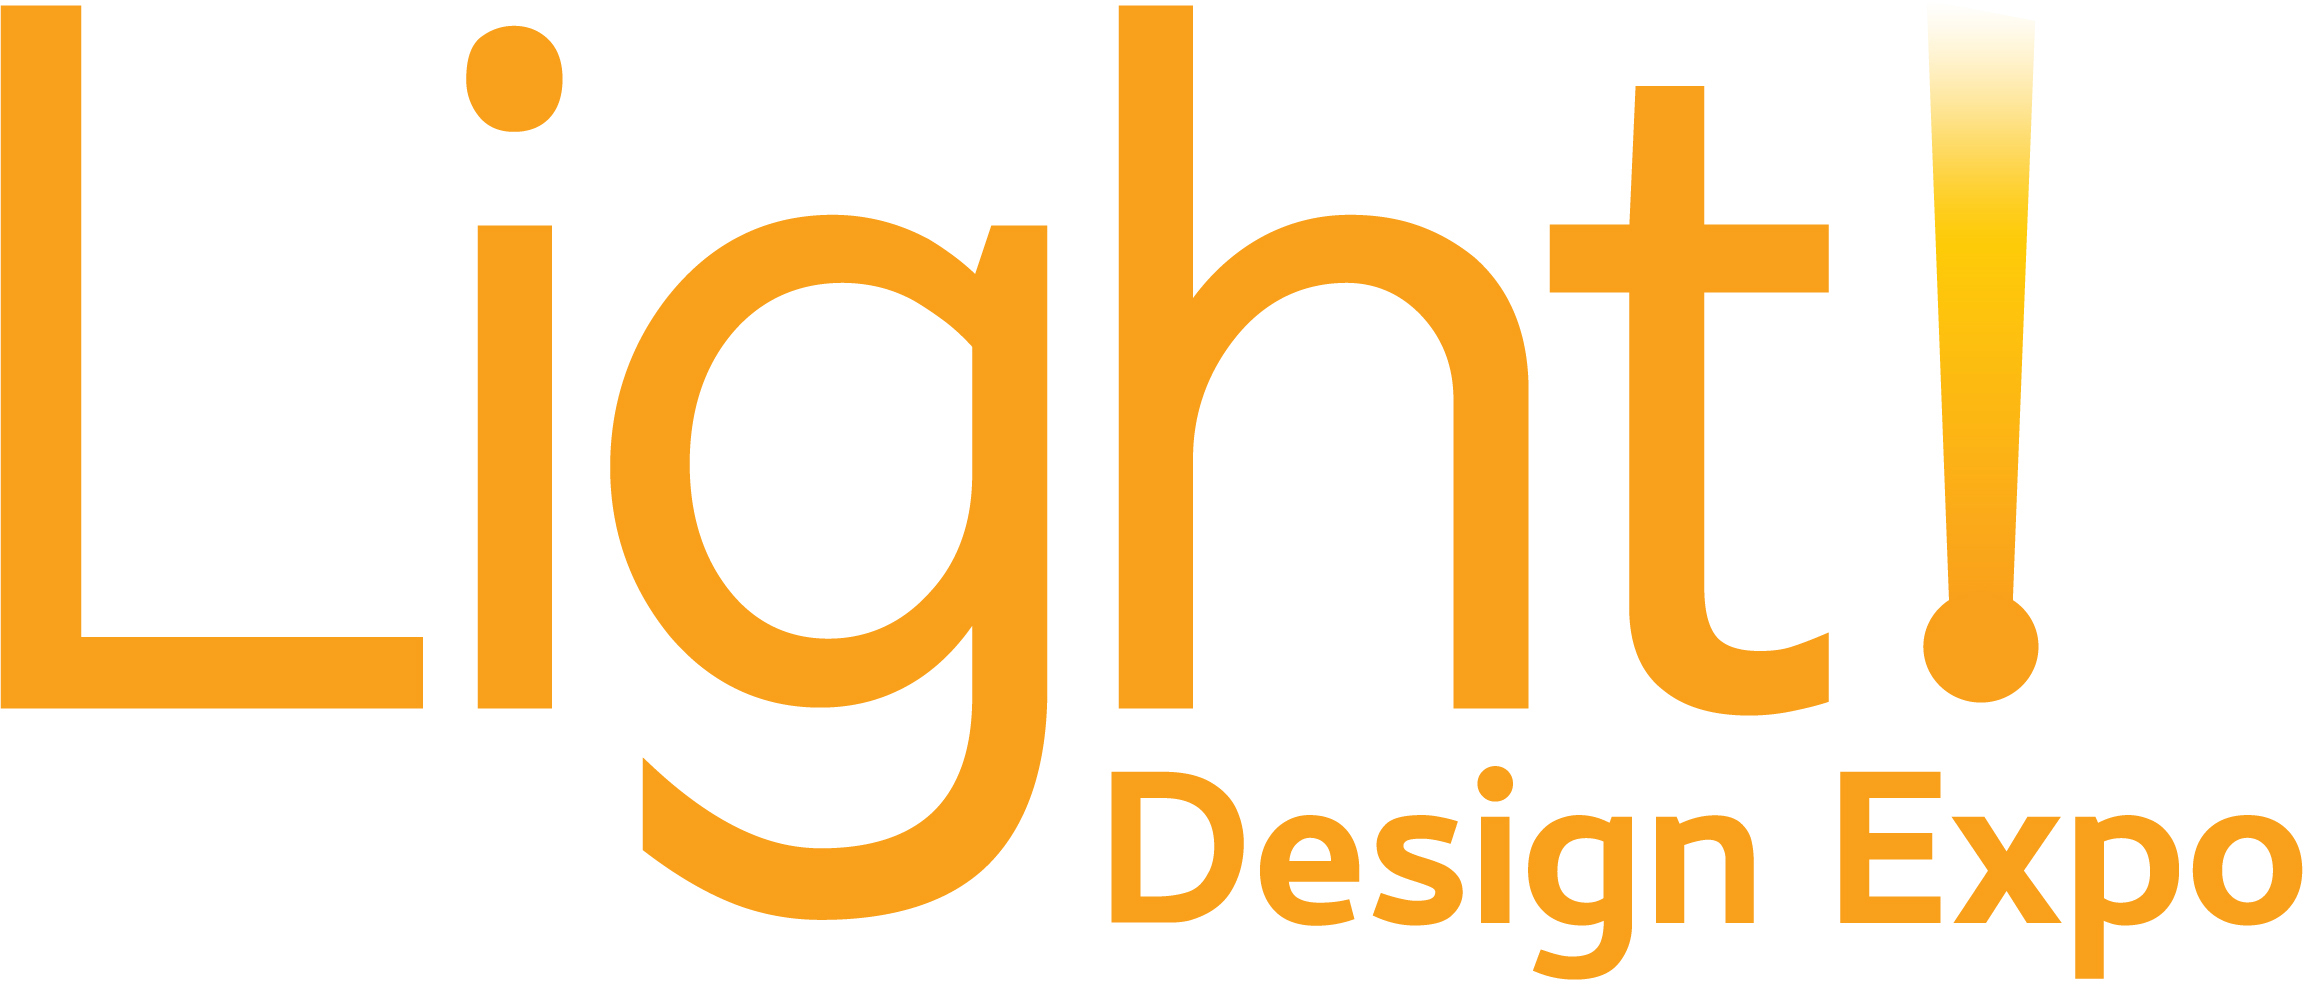 Light! Design Expo